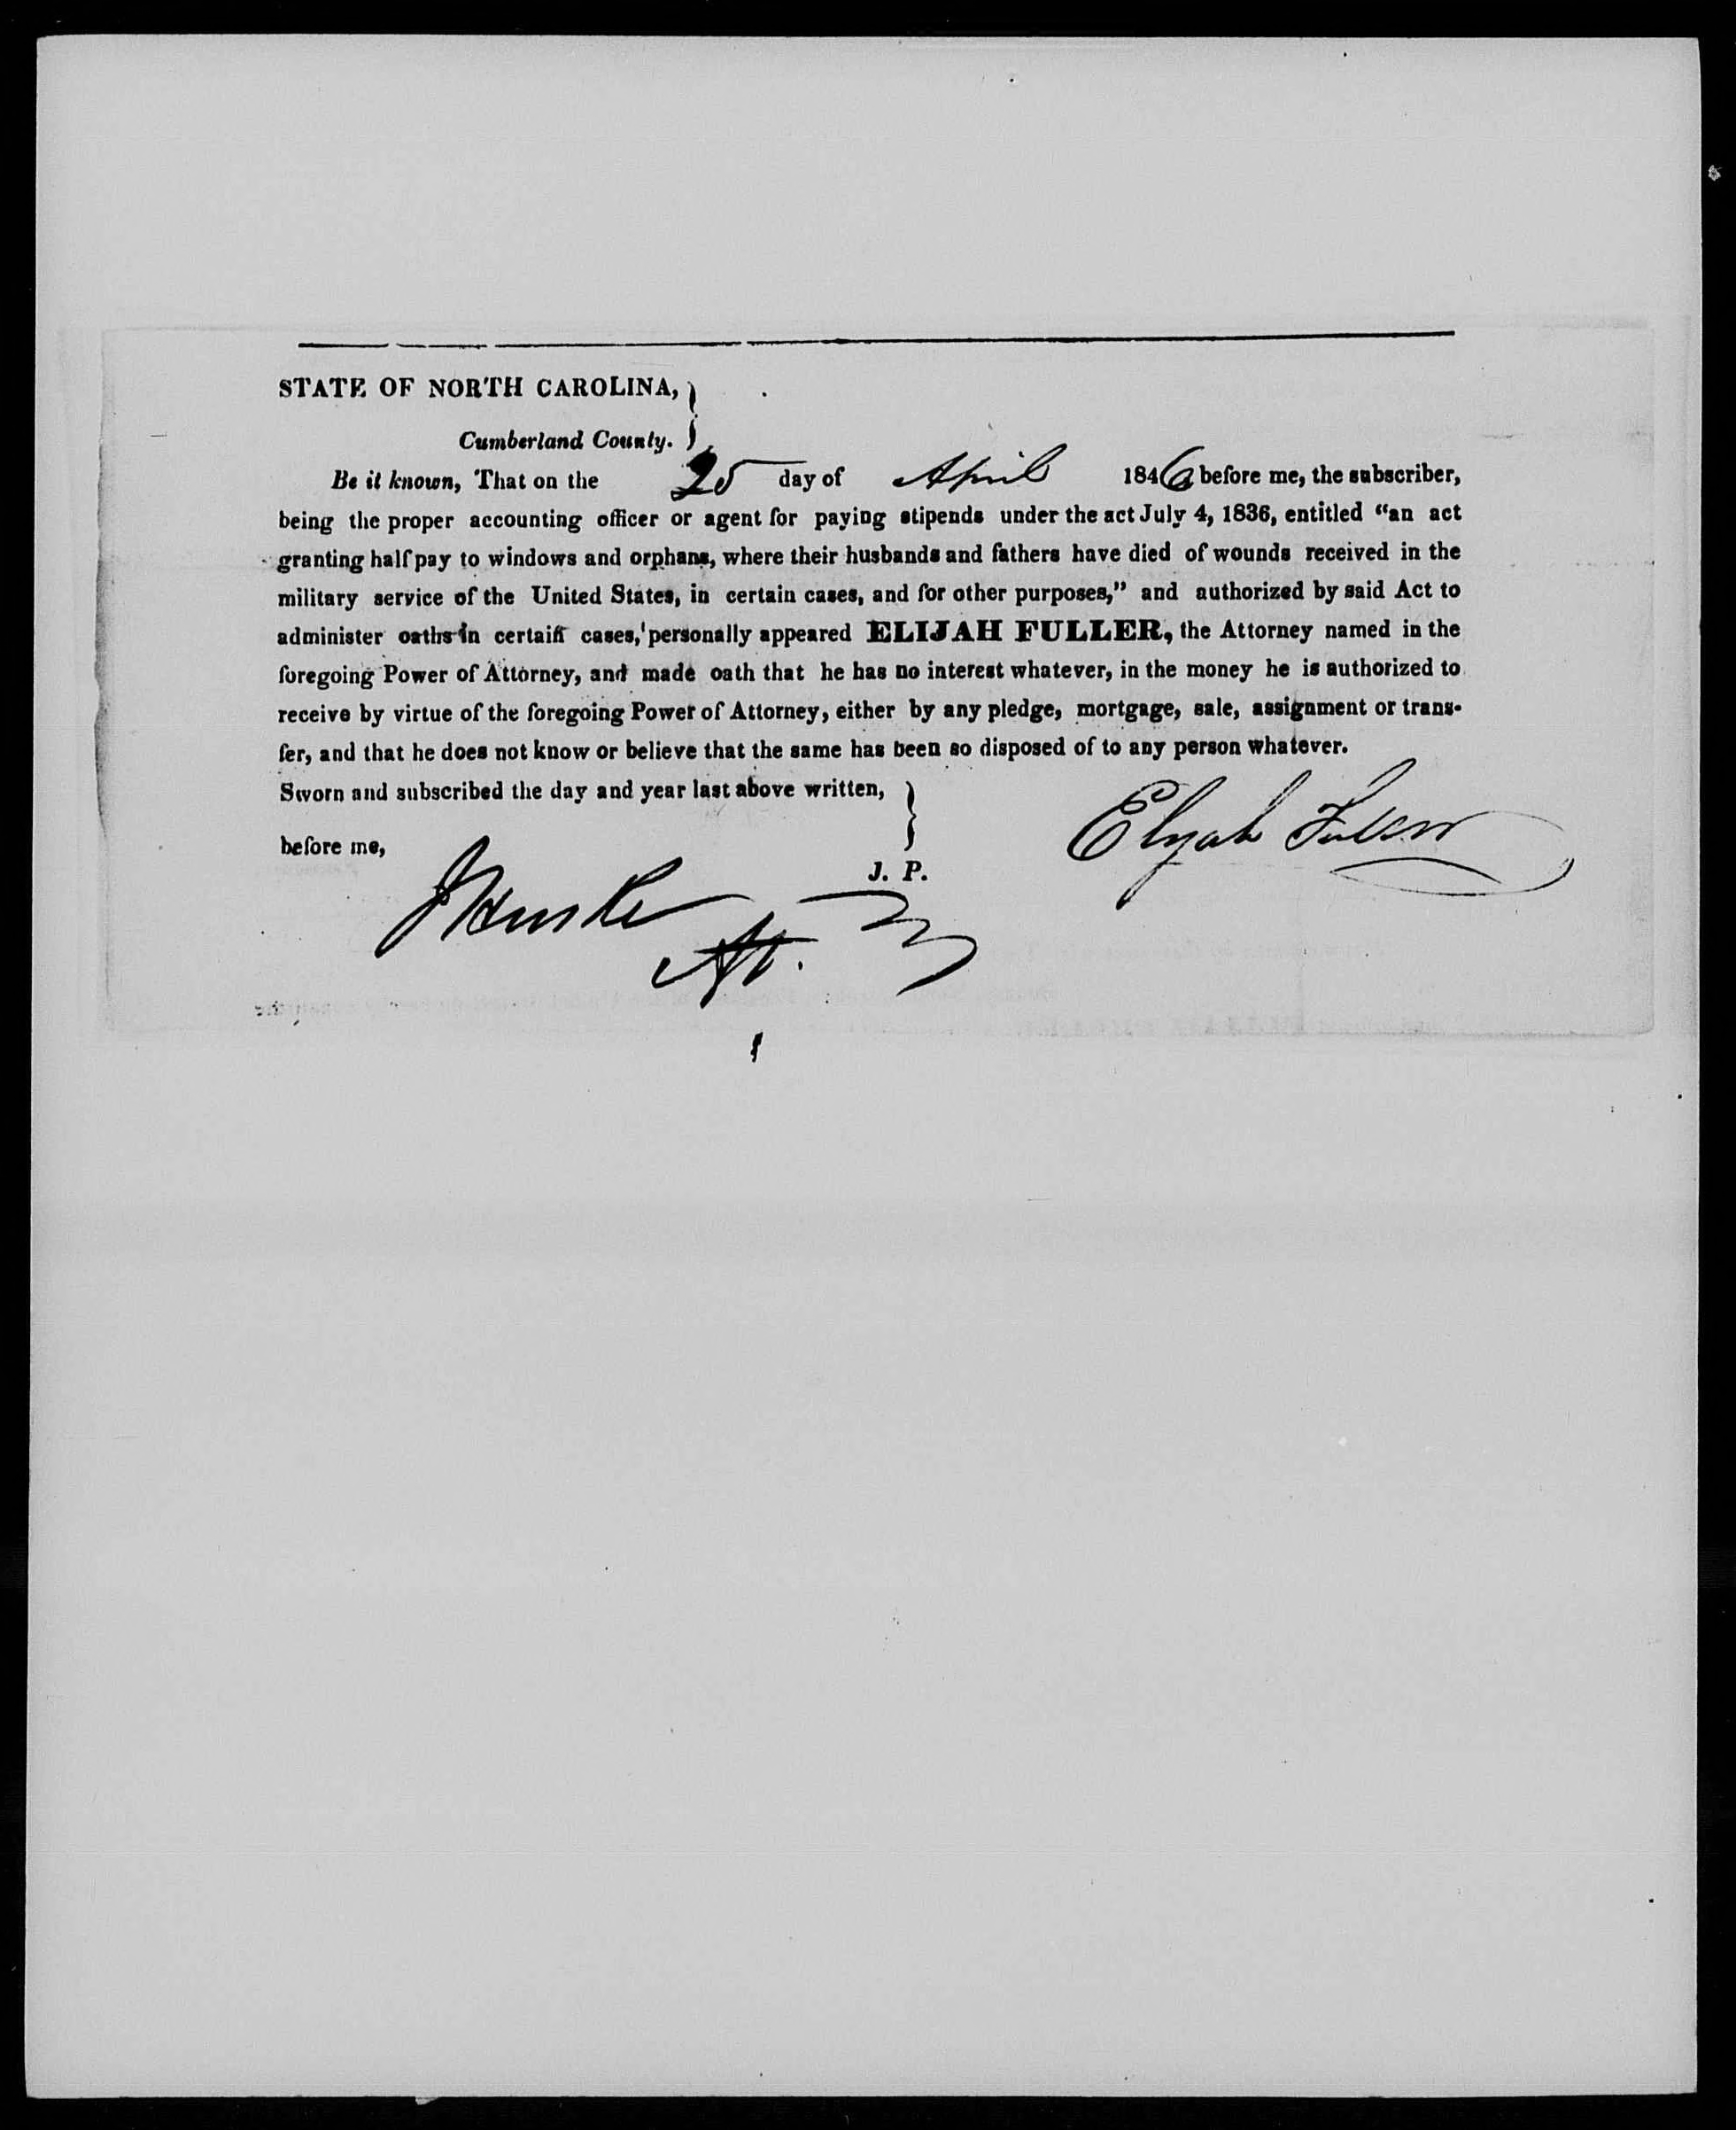 Receipt for Ruth Edwards from John Huske to Elijah Fuller, 25 April 1846, page 2